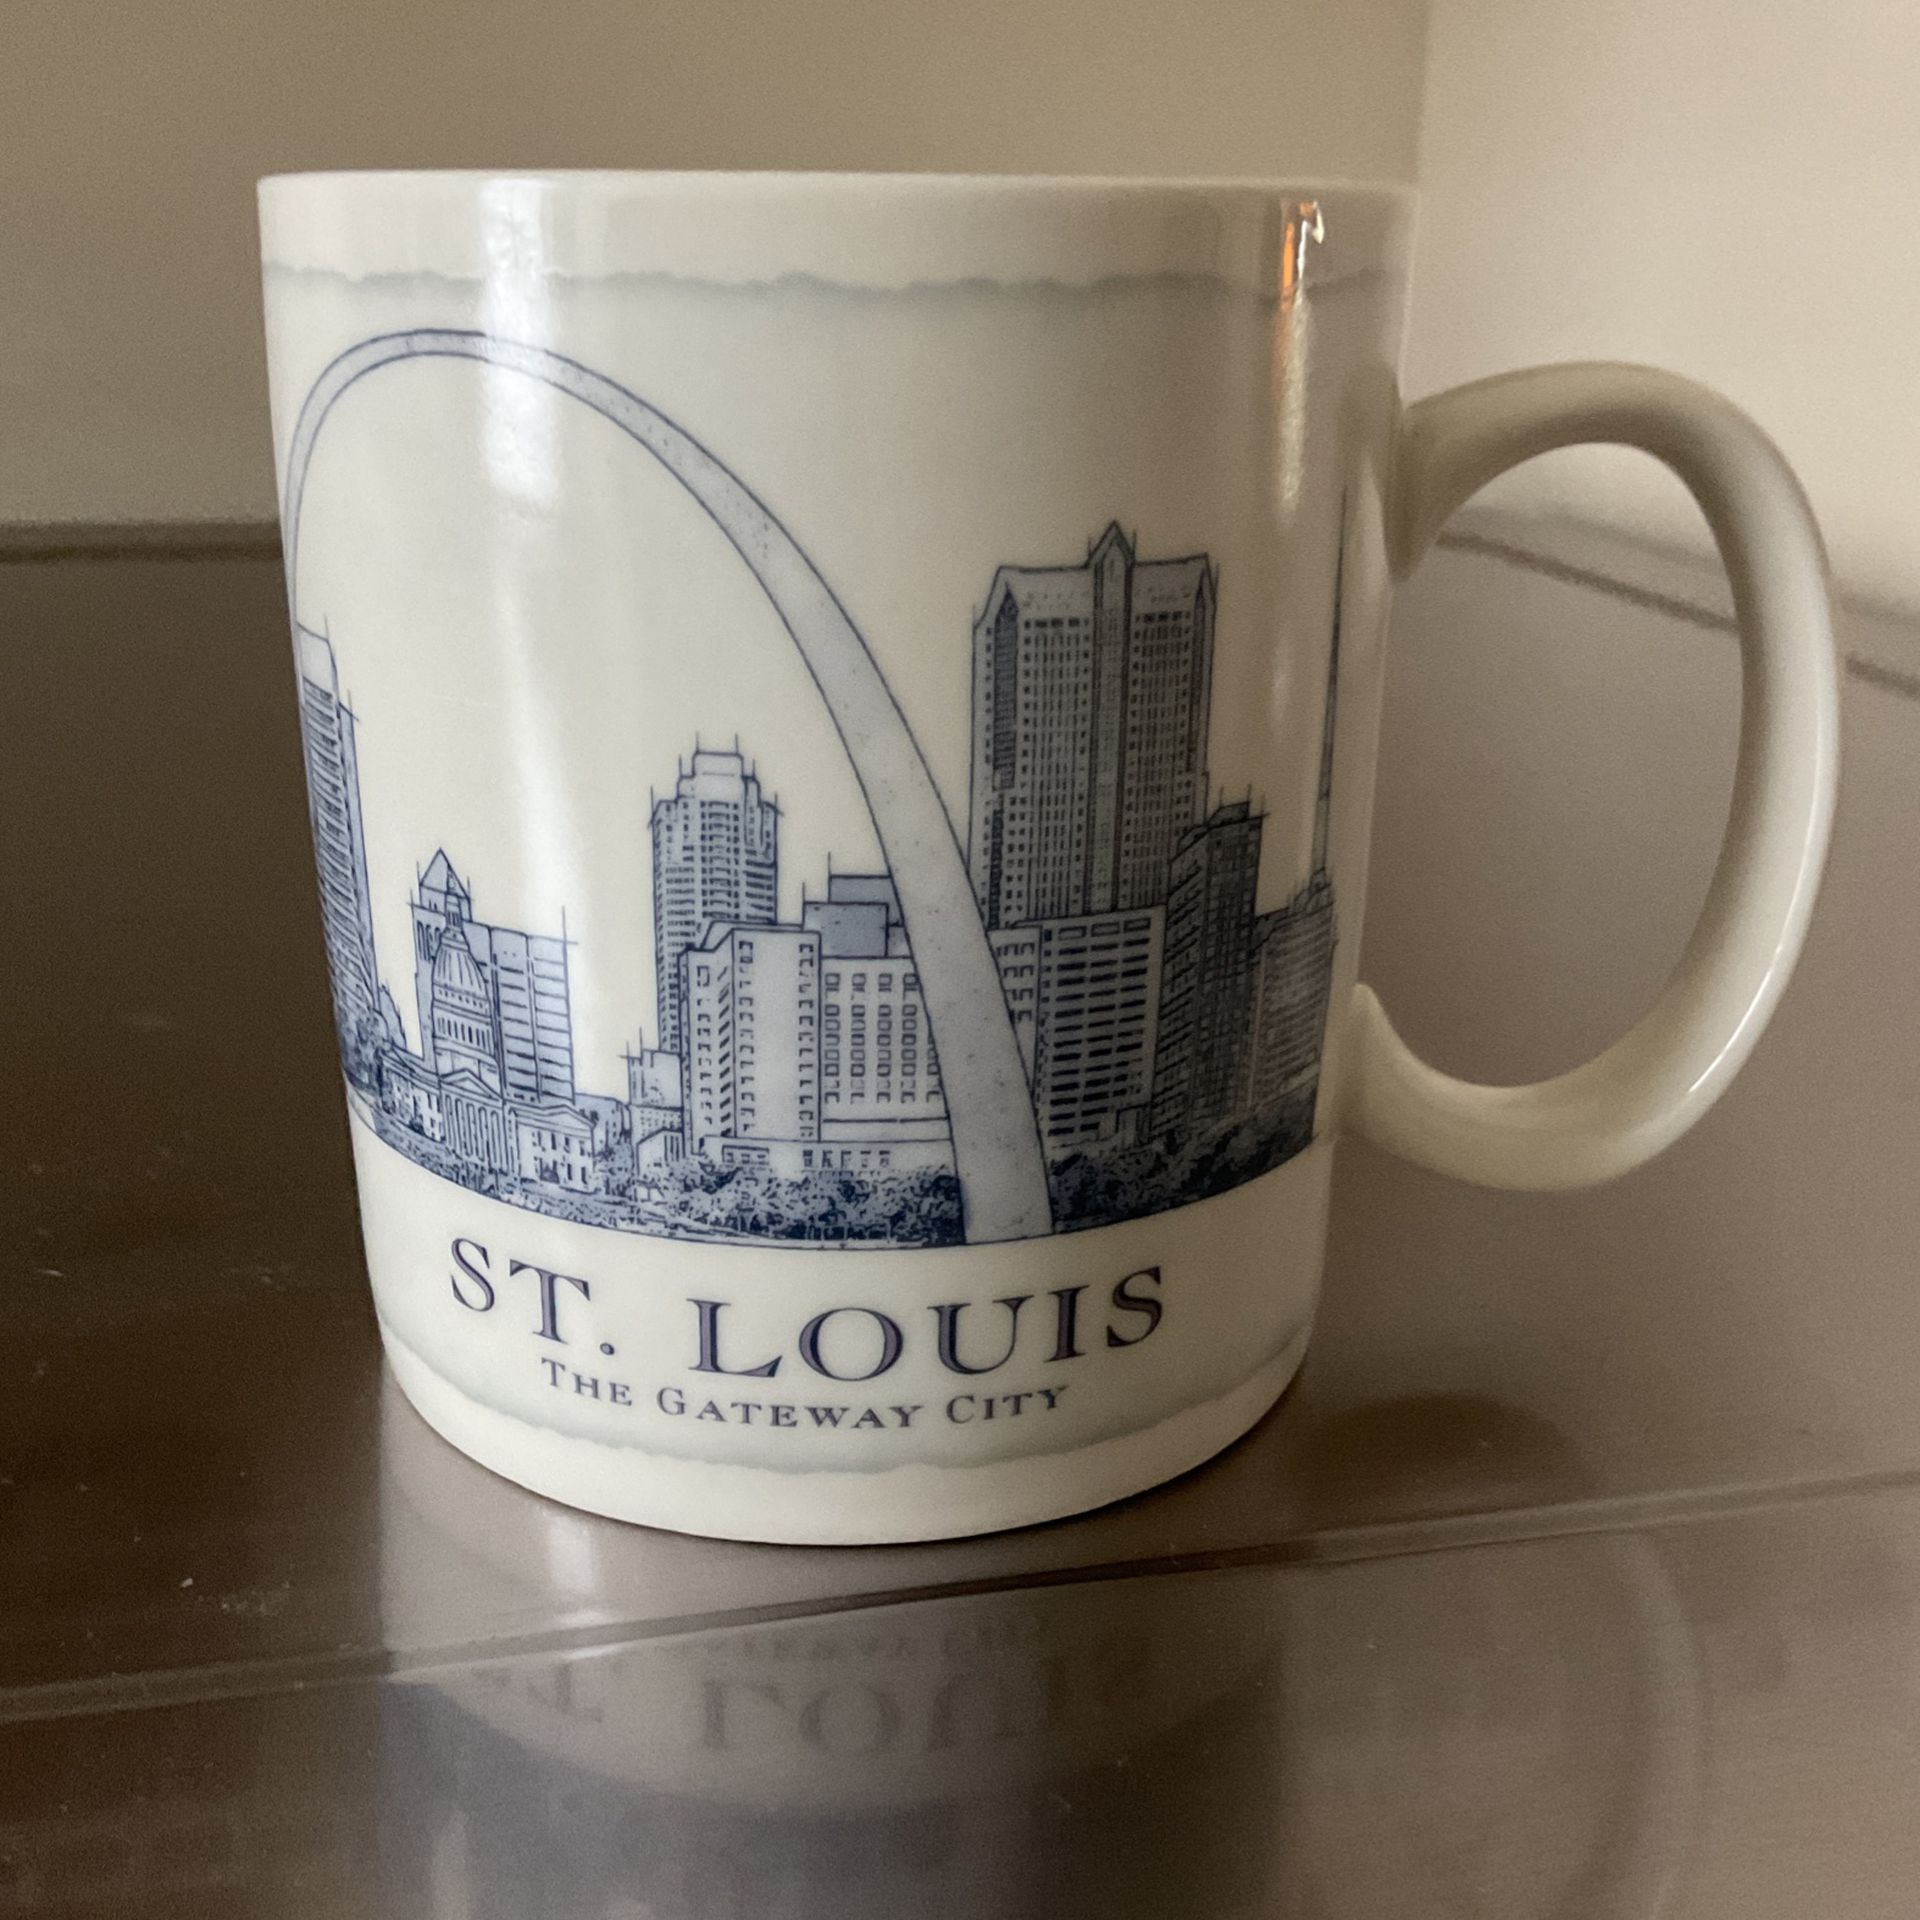 Starbucks St Louis Collectors Coffee Mug